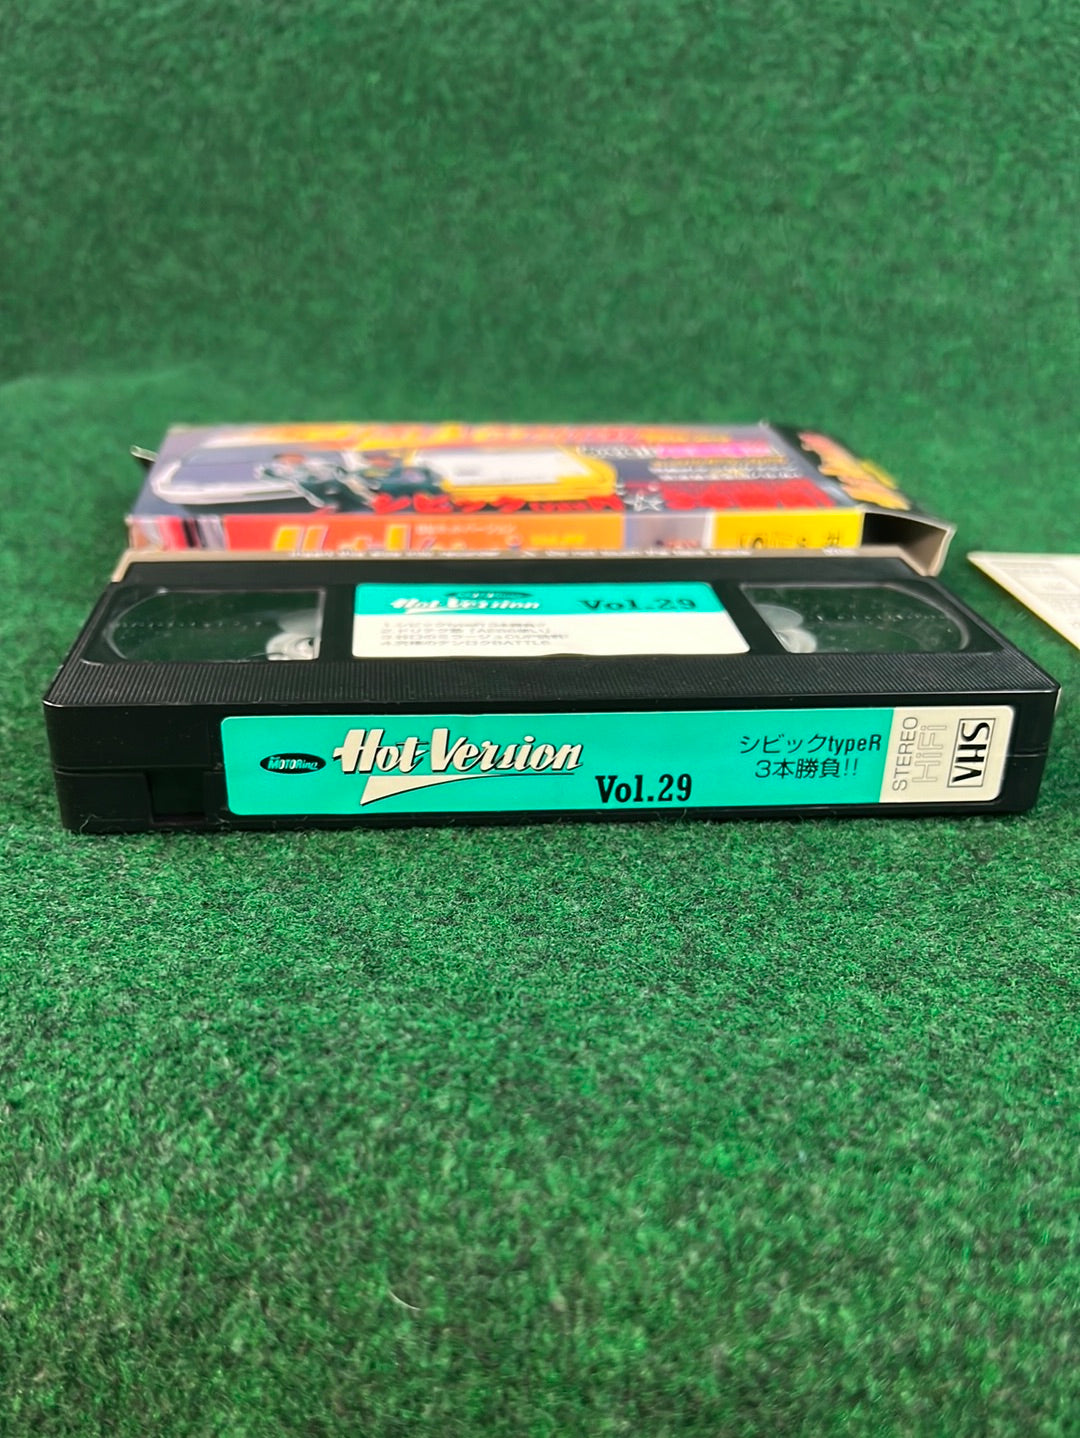 Hot Version VHS - Vol. 29